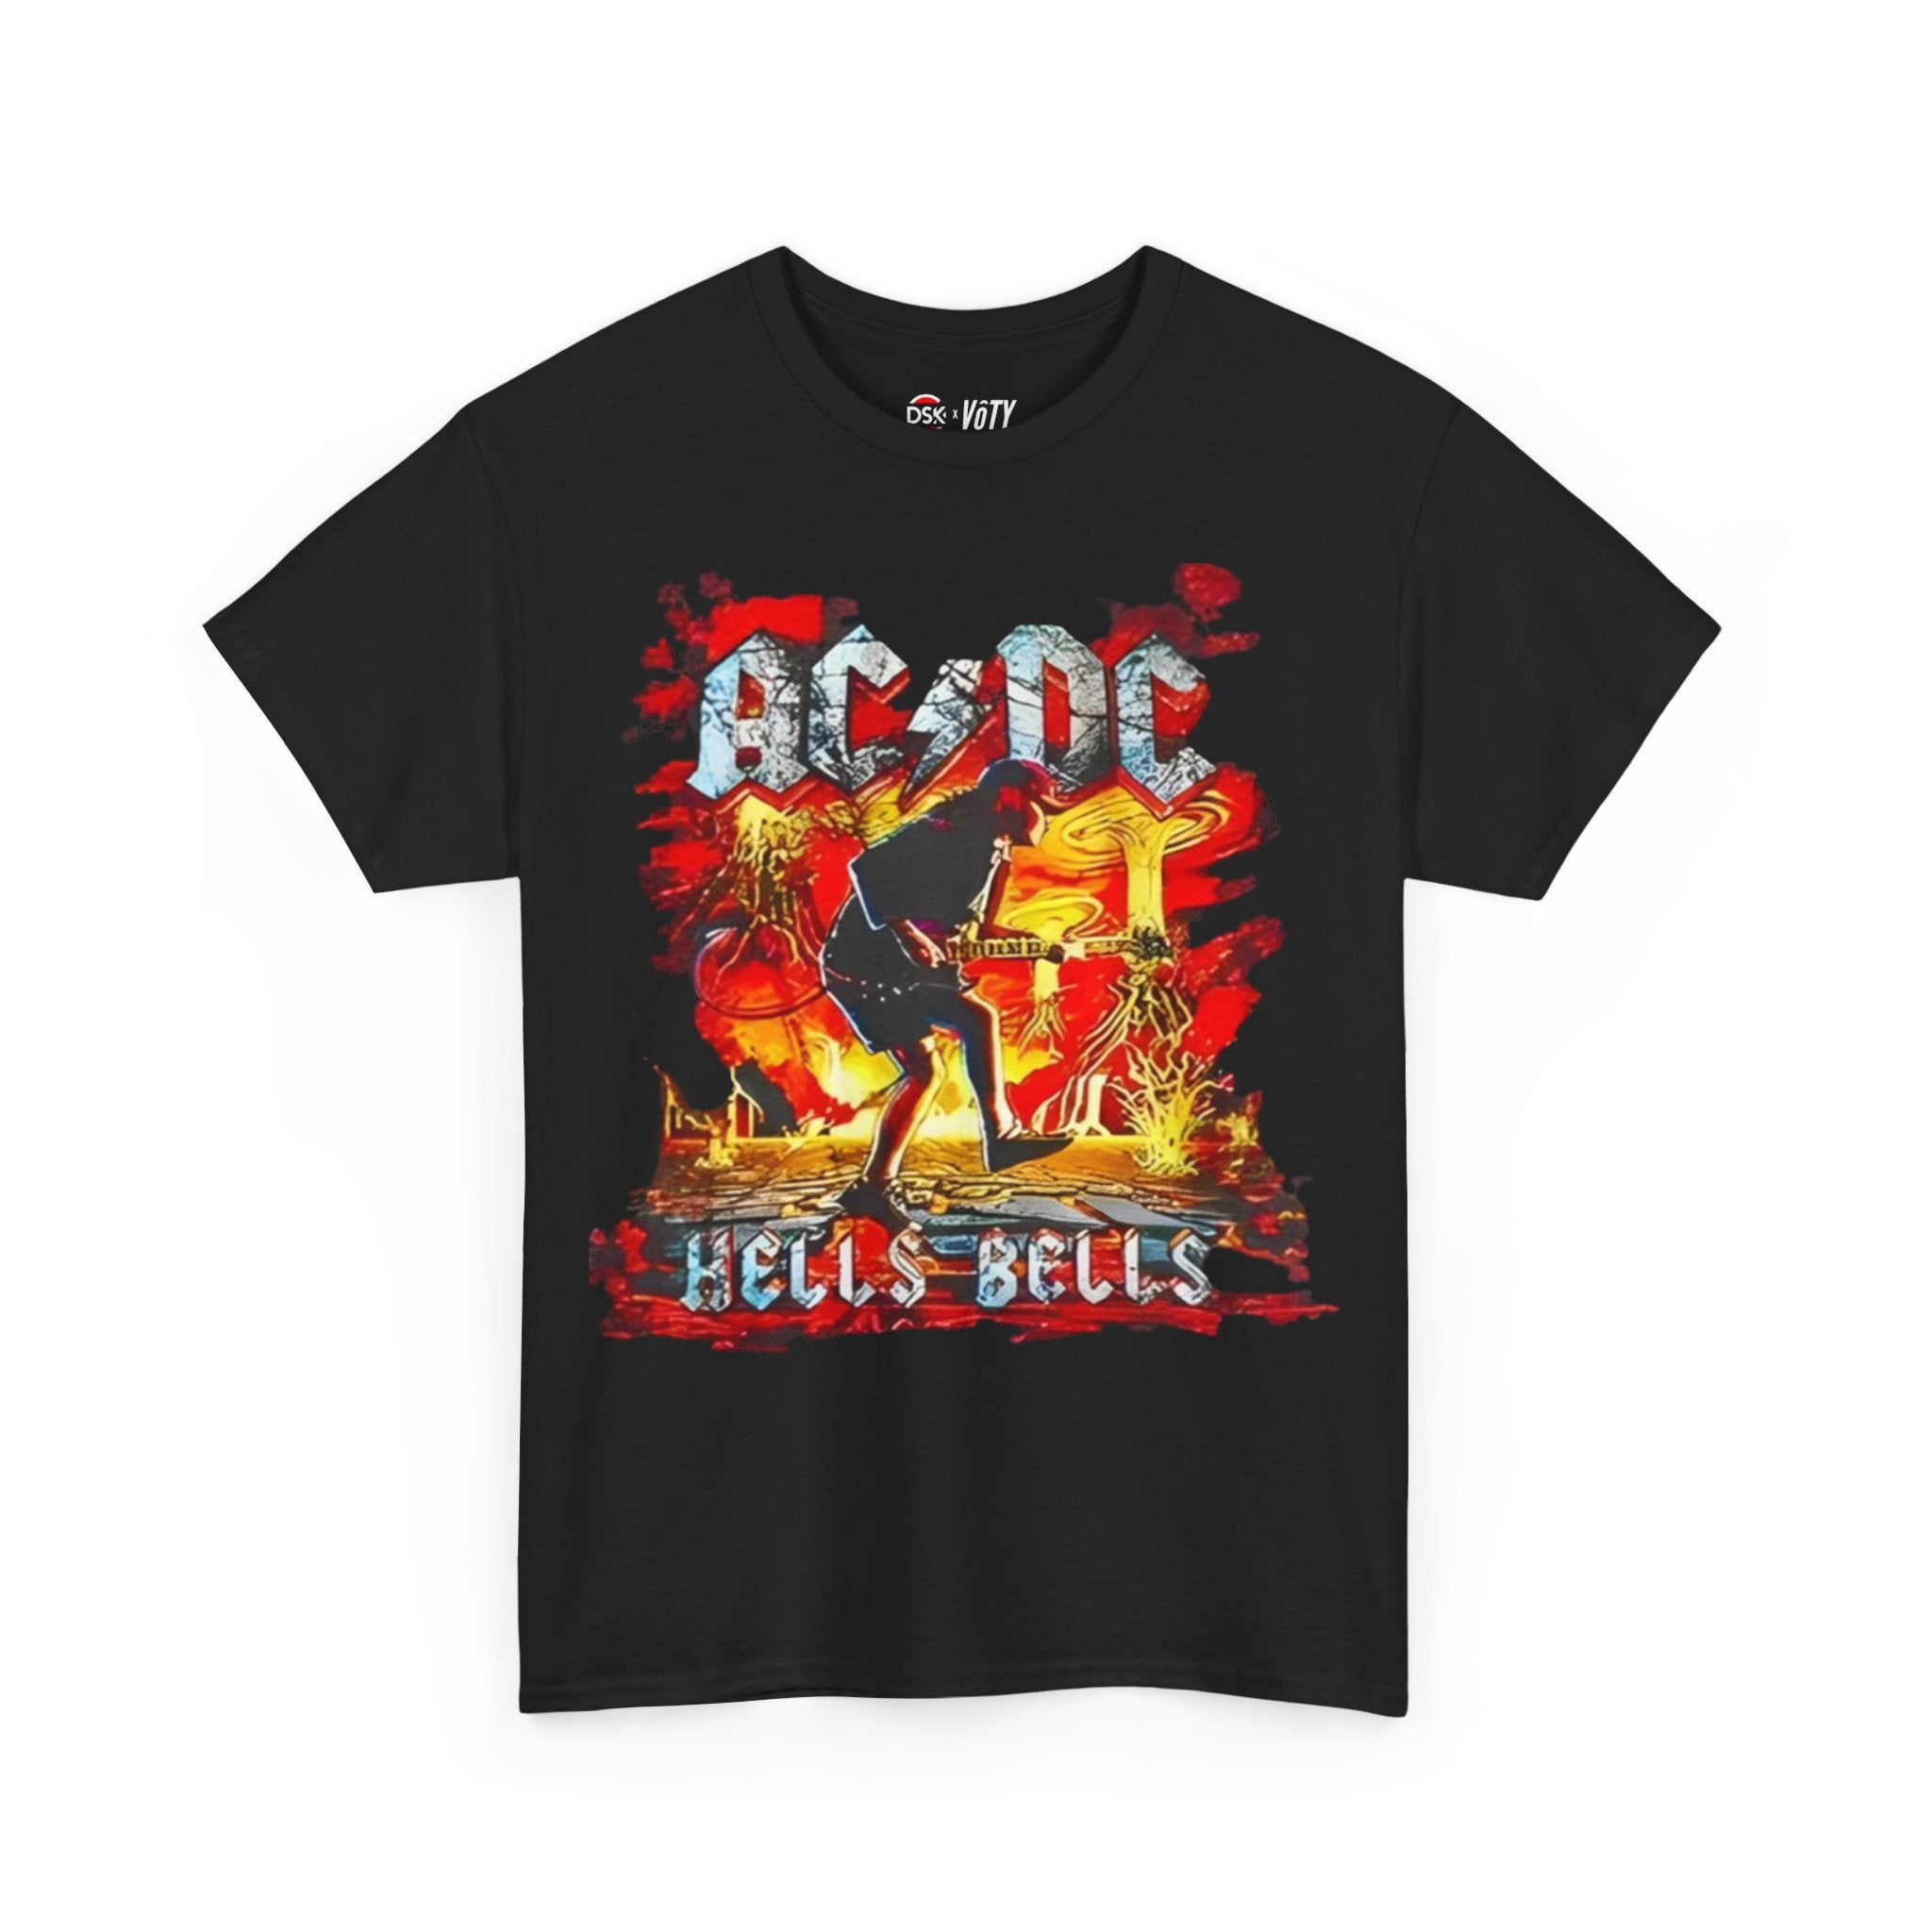 ACDC "Hells Bells" T-Shirt